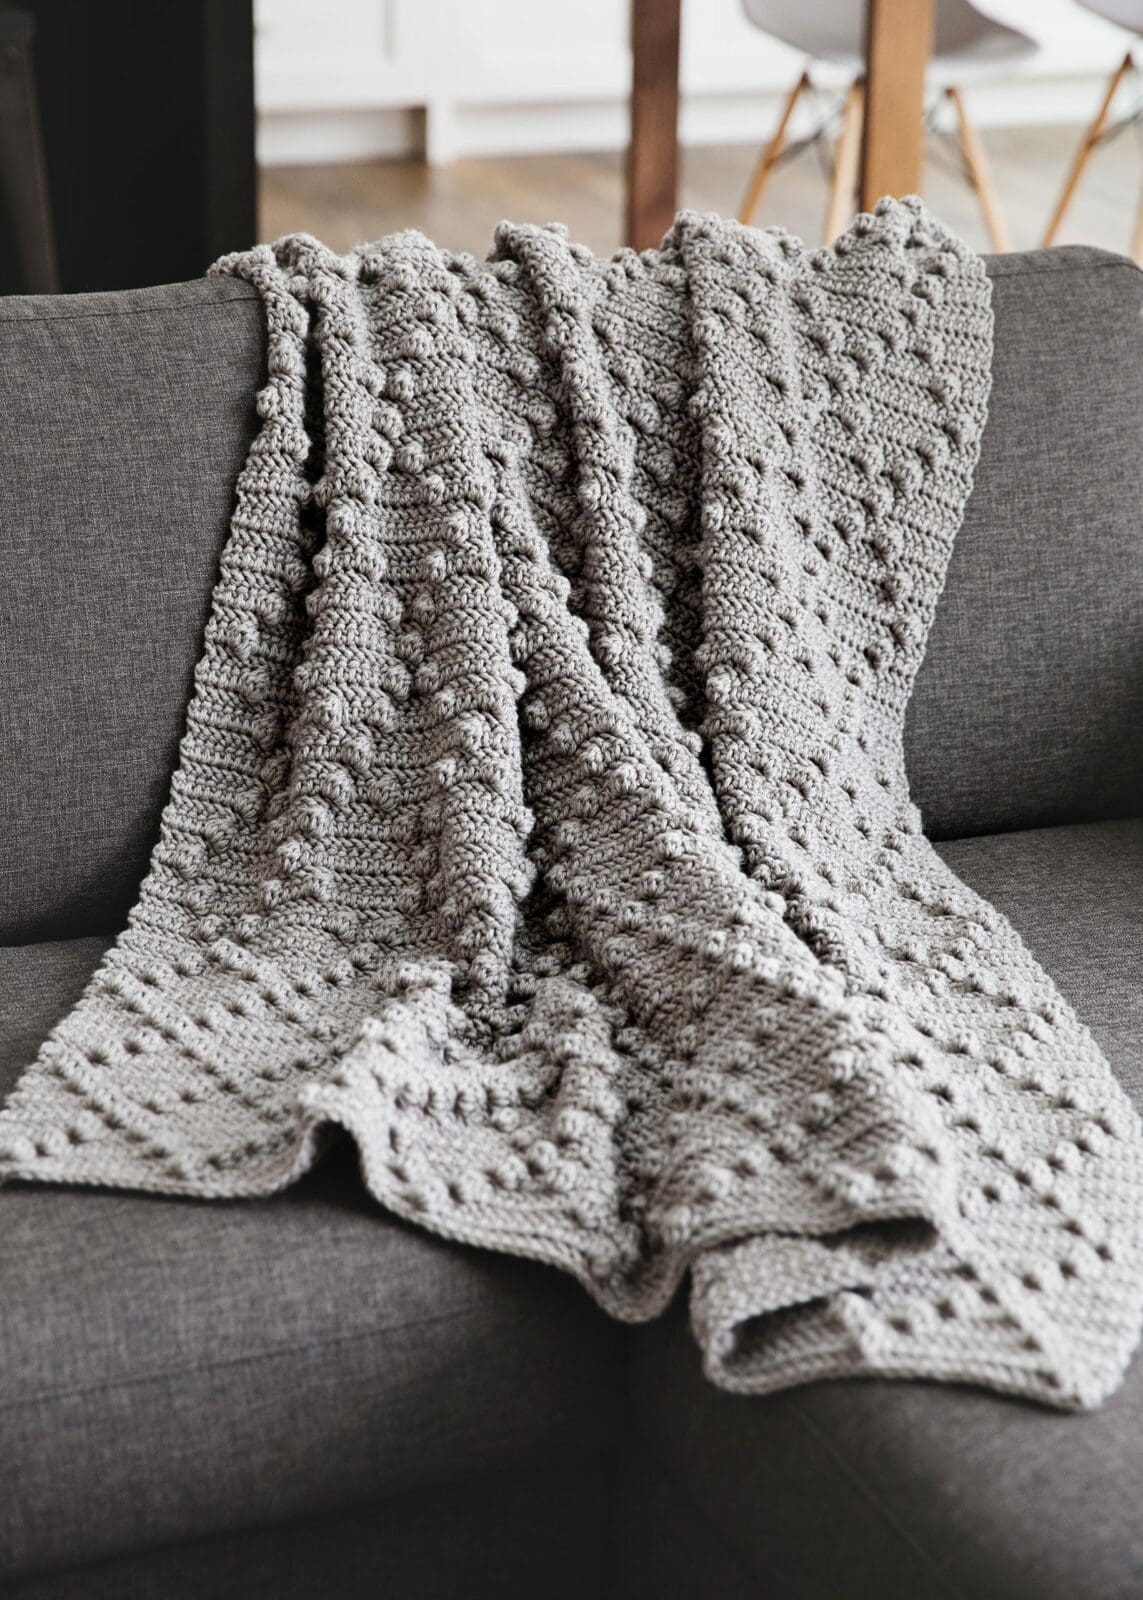 Crochet Bobble Blanket Pattern - With Video Tutorial - Leelee Knits